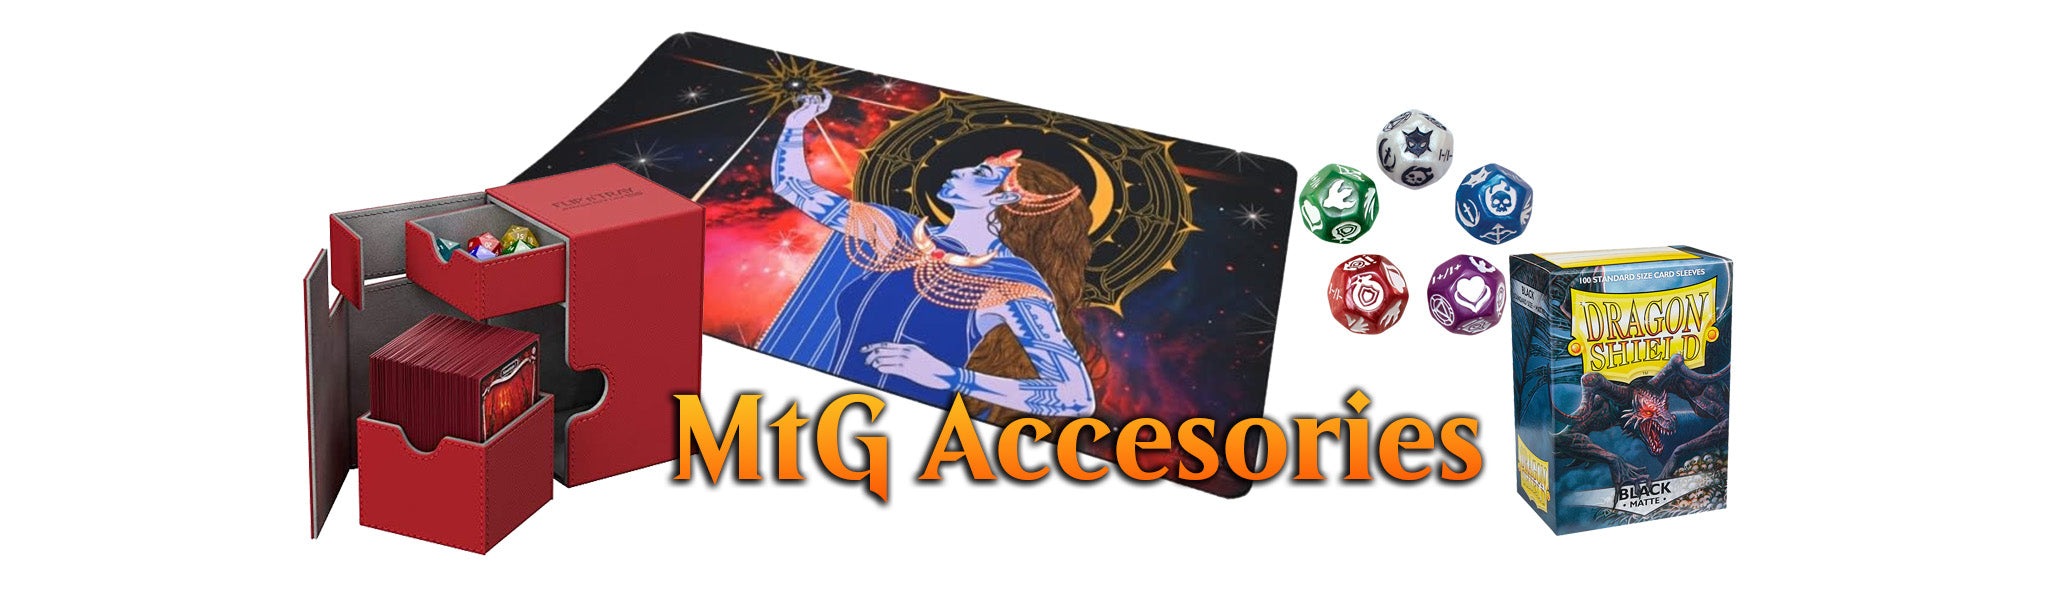 MtG Accessories